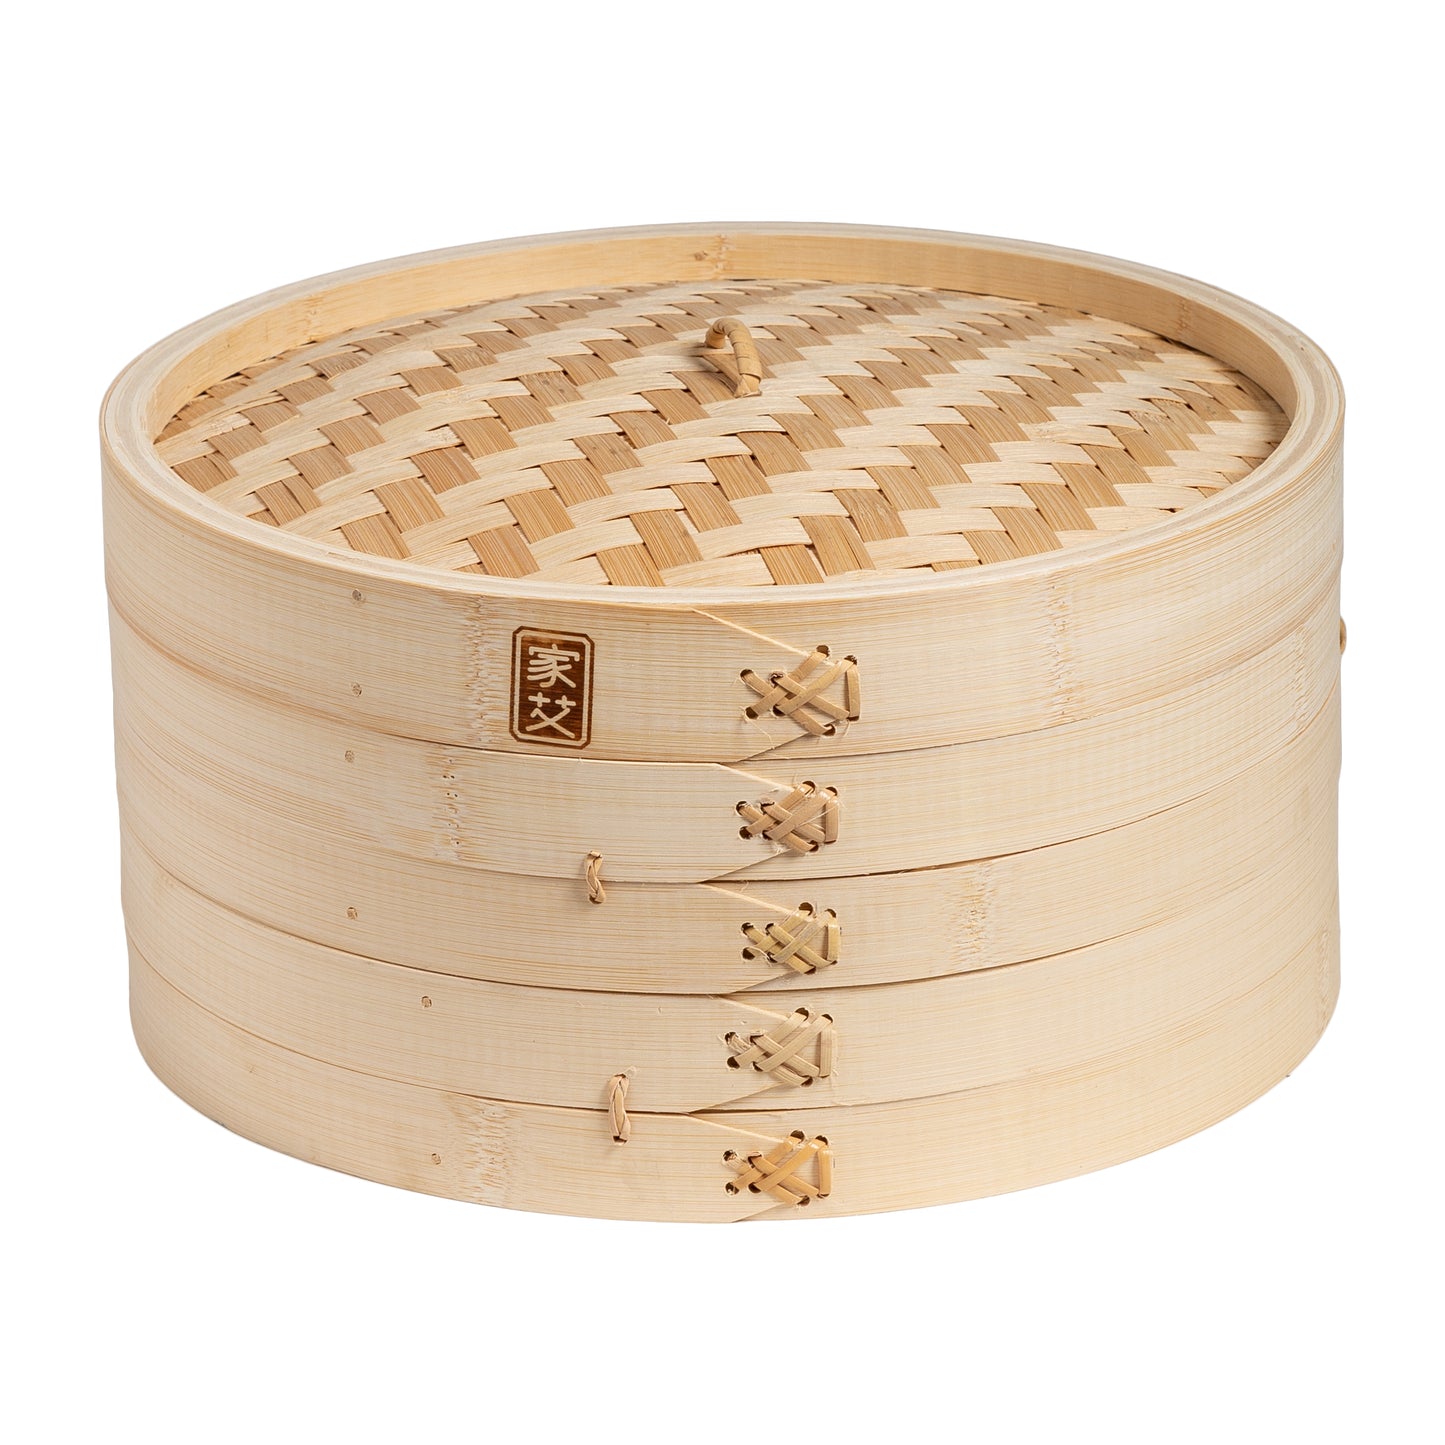 2-Tier Bamboo Steamer Baskets, 12-Inch